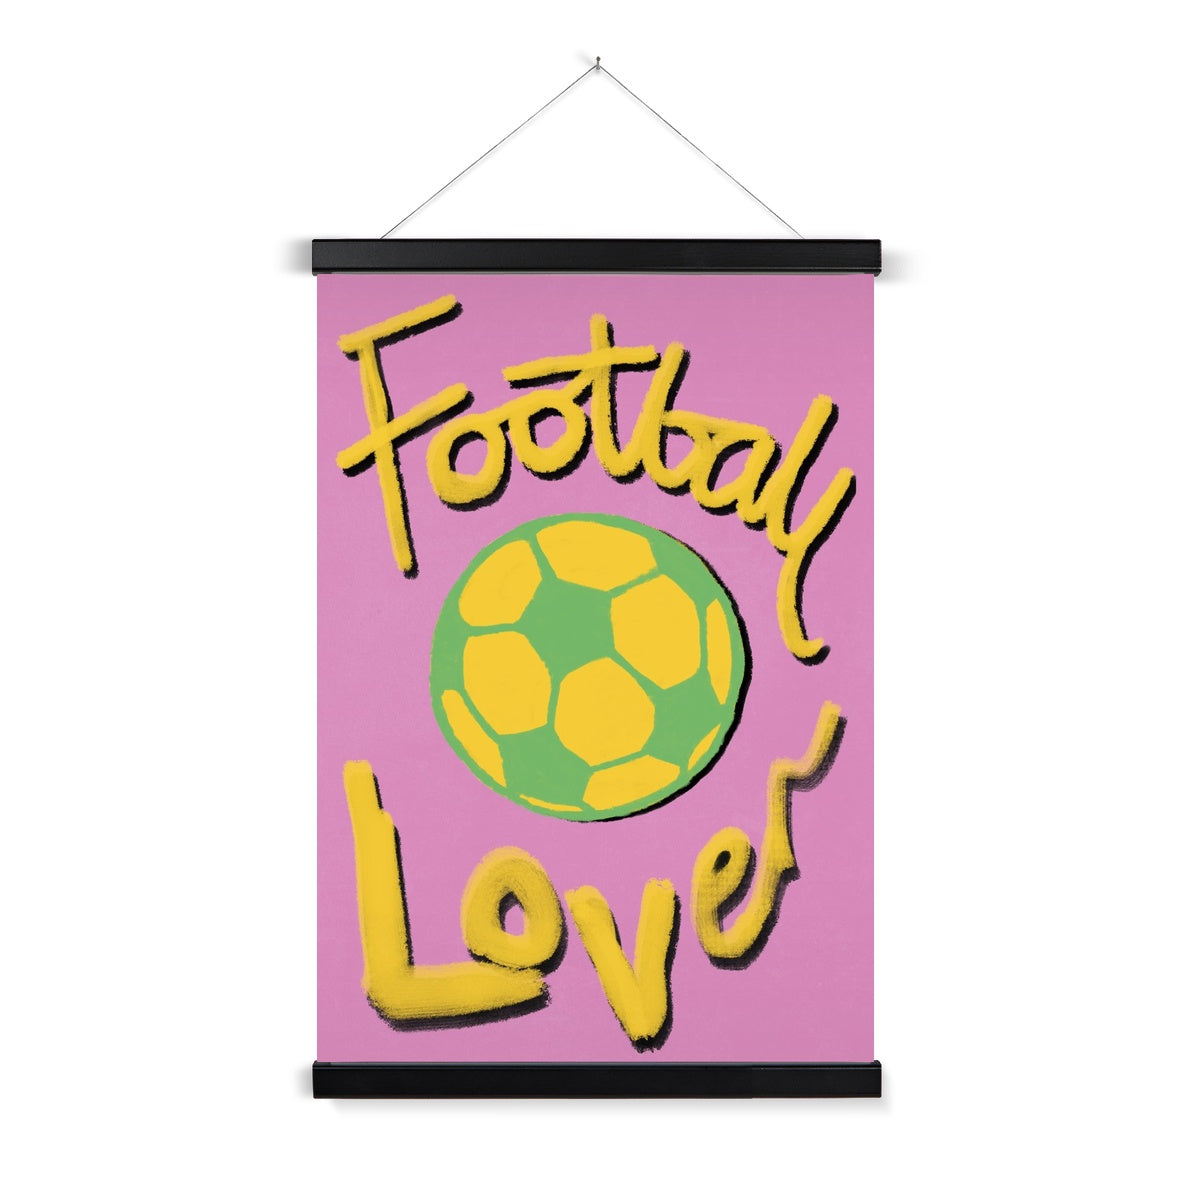 Football Lover Print - Pink, Yellow, Green Fine Art Print with Hanger